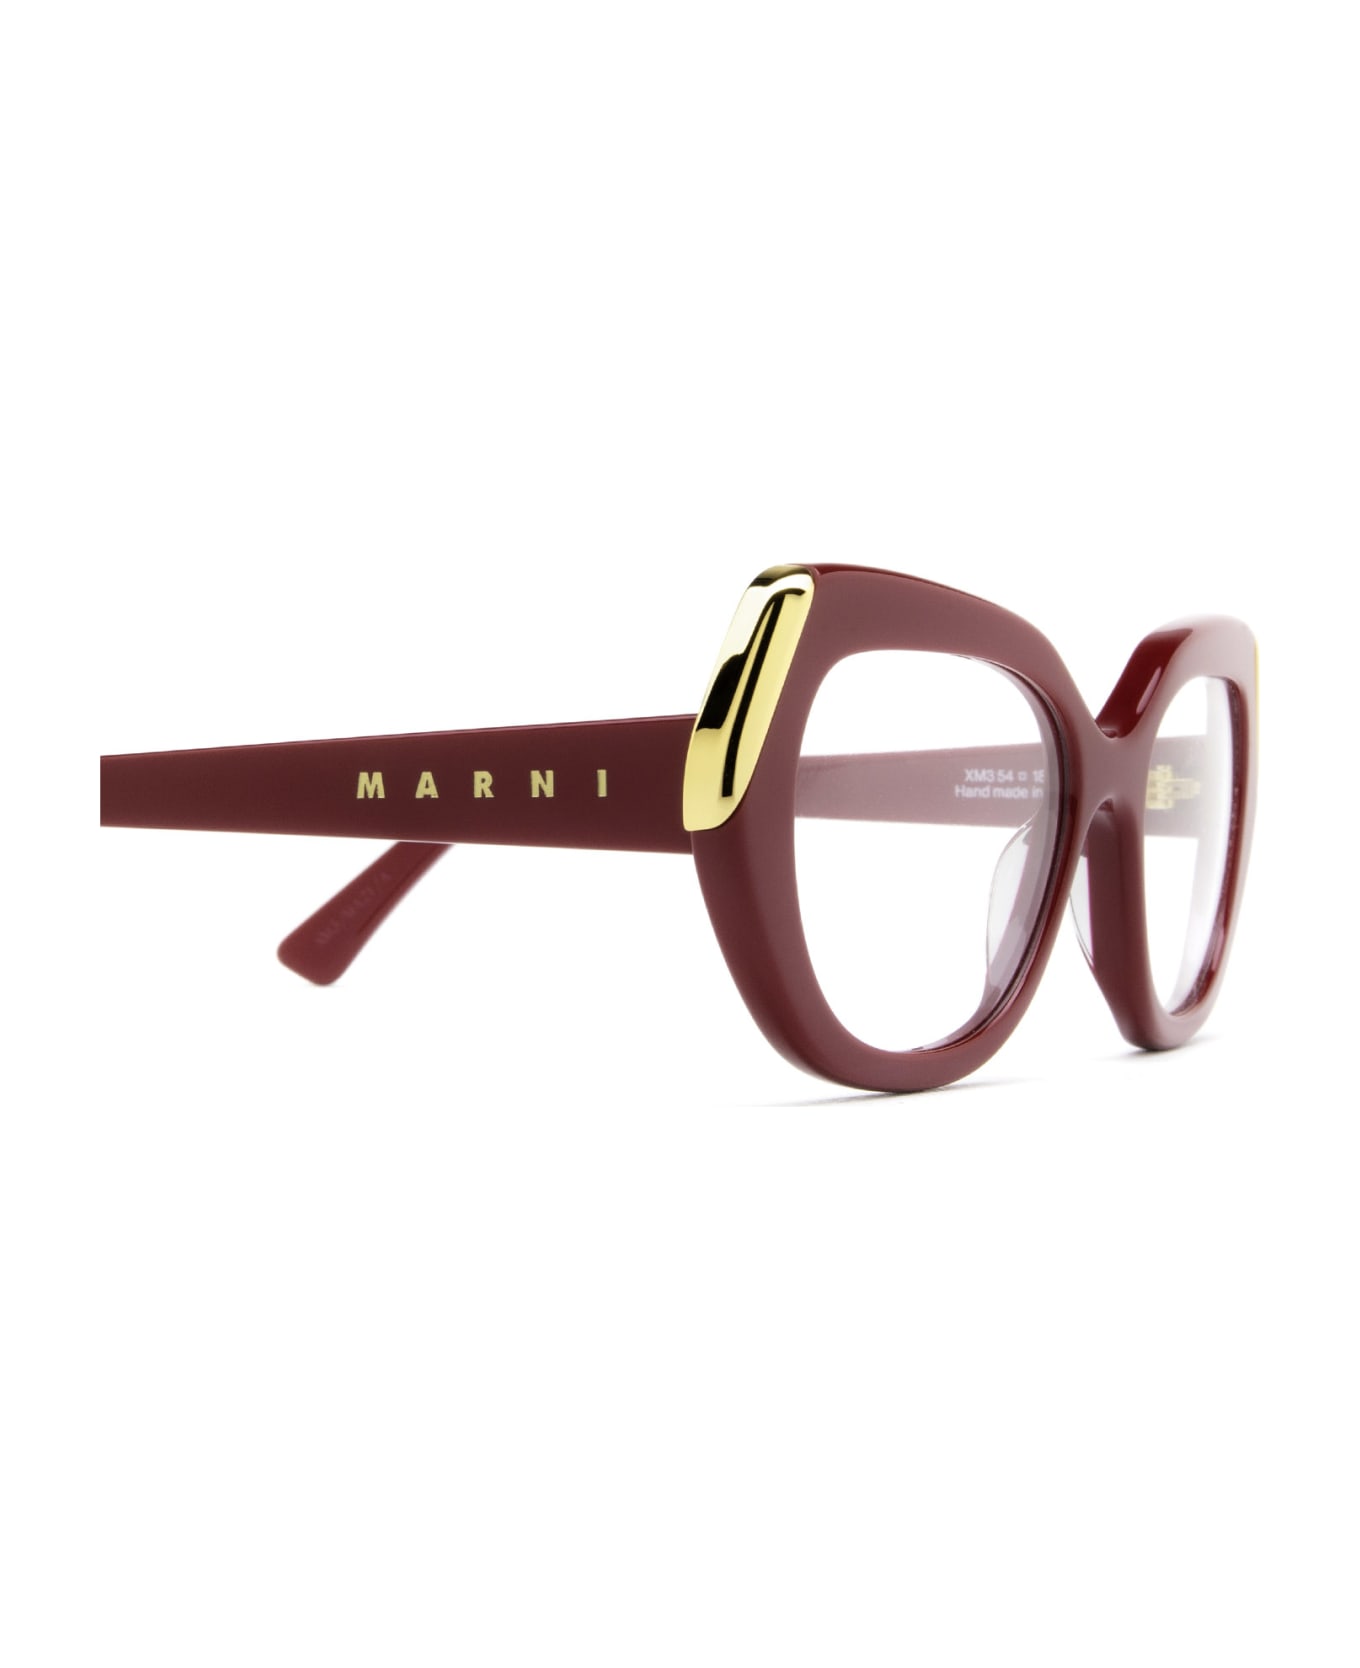 Marni Eyewear Antelope Canyon Bordeaux Glasses - Bordeaux